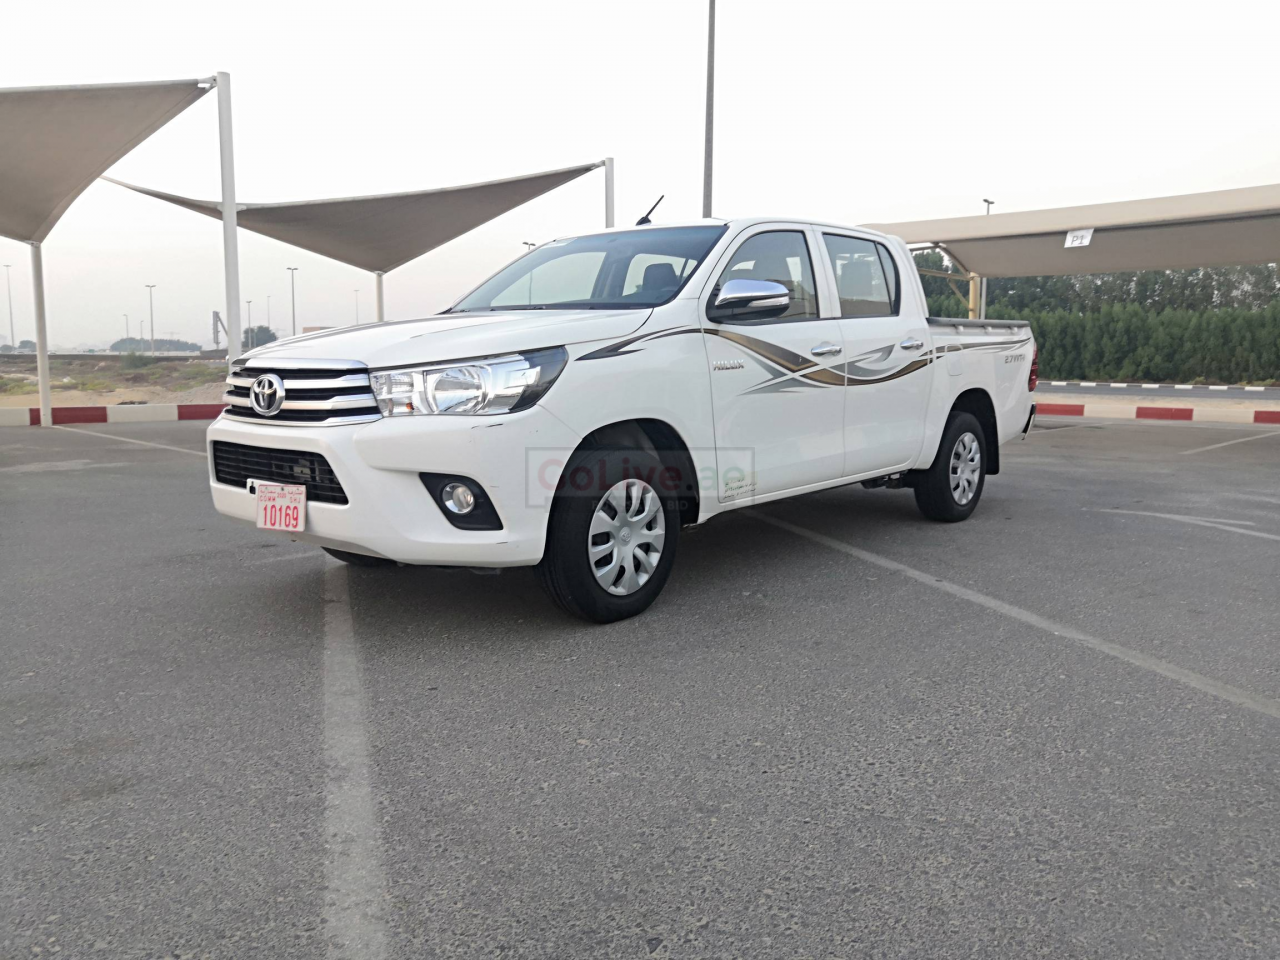 Toyota Hilux 2017 AED 68,000, GCC Spec, Good condition, Full Option, Negotiable